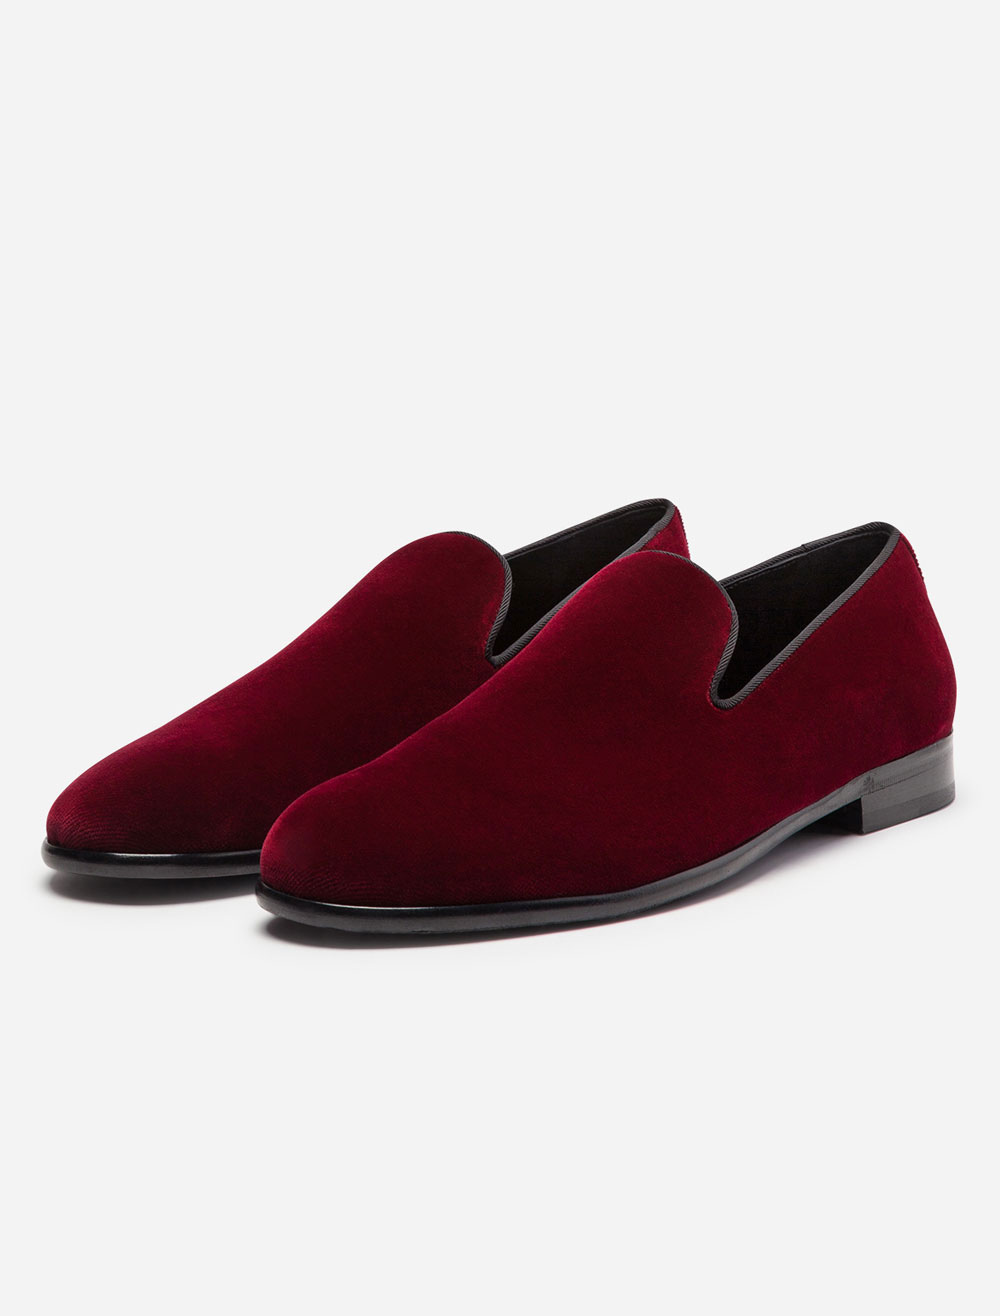 Zapatos de hombre | Zapatos holgazanes para hombres Zapatos de terciopelo con punta redonda y zapatos planos - GT43006